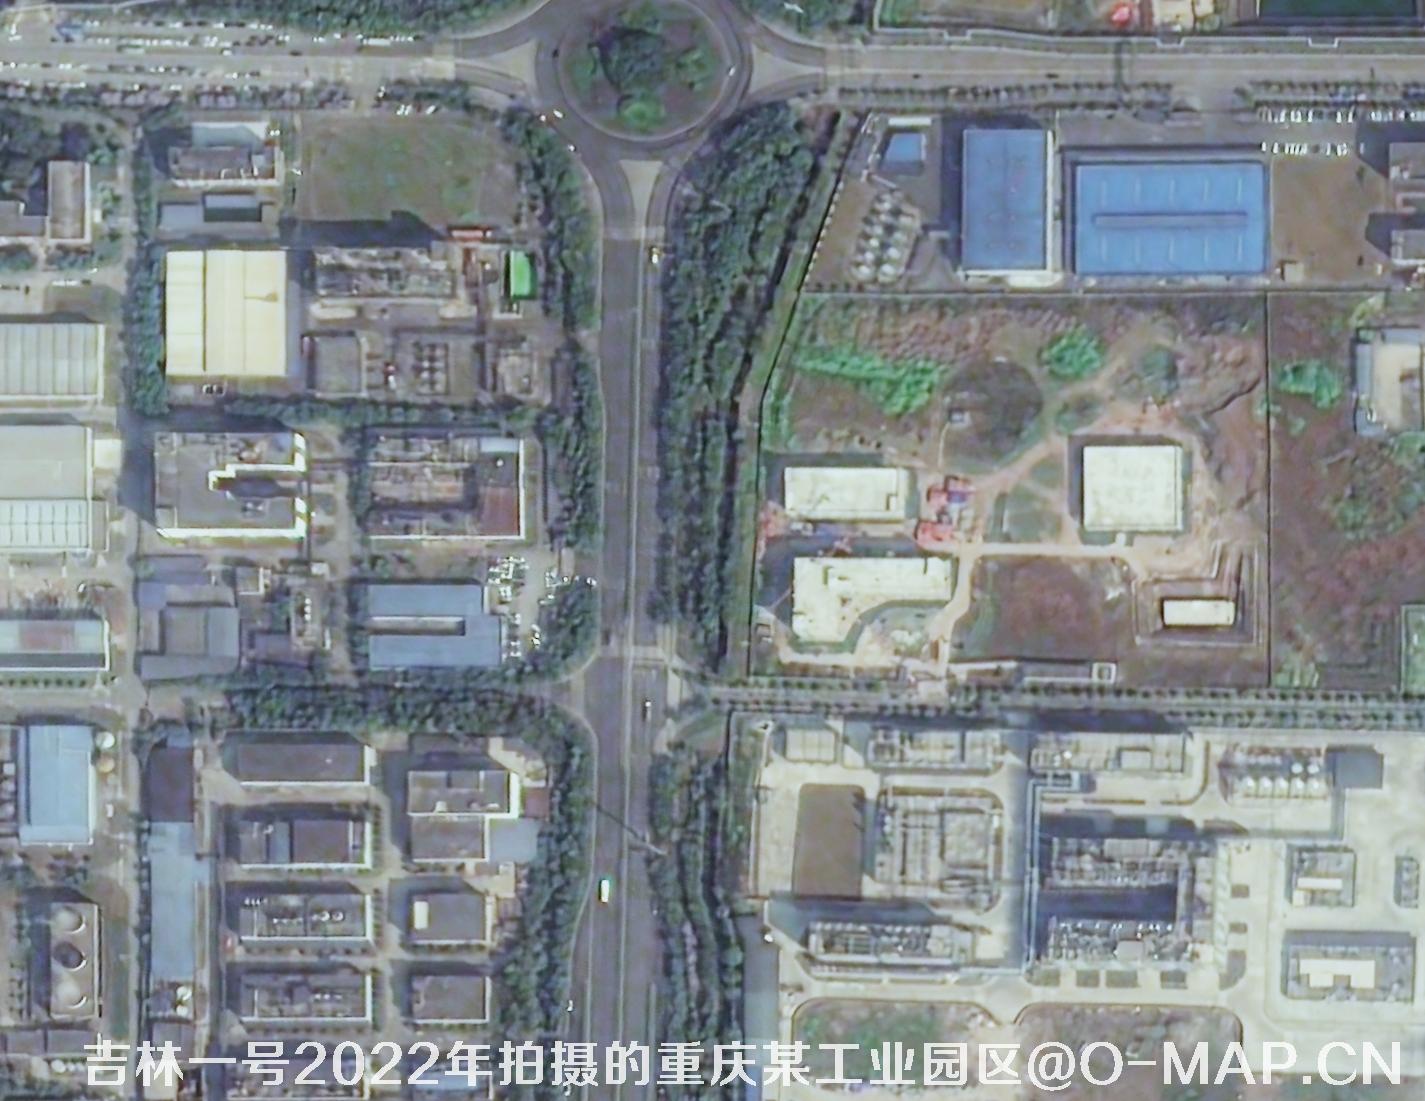 Satellite Image Samples collected by 0.75 meter satellite